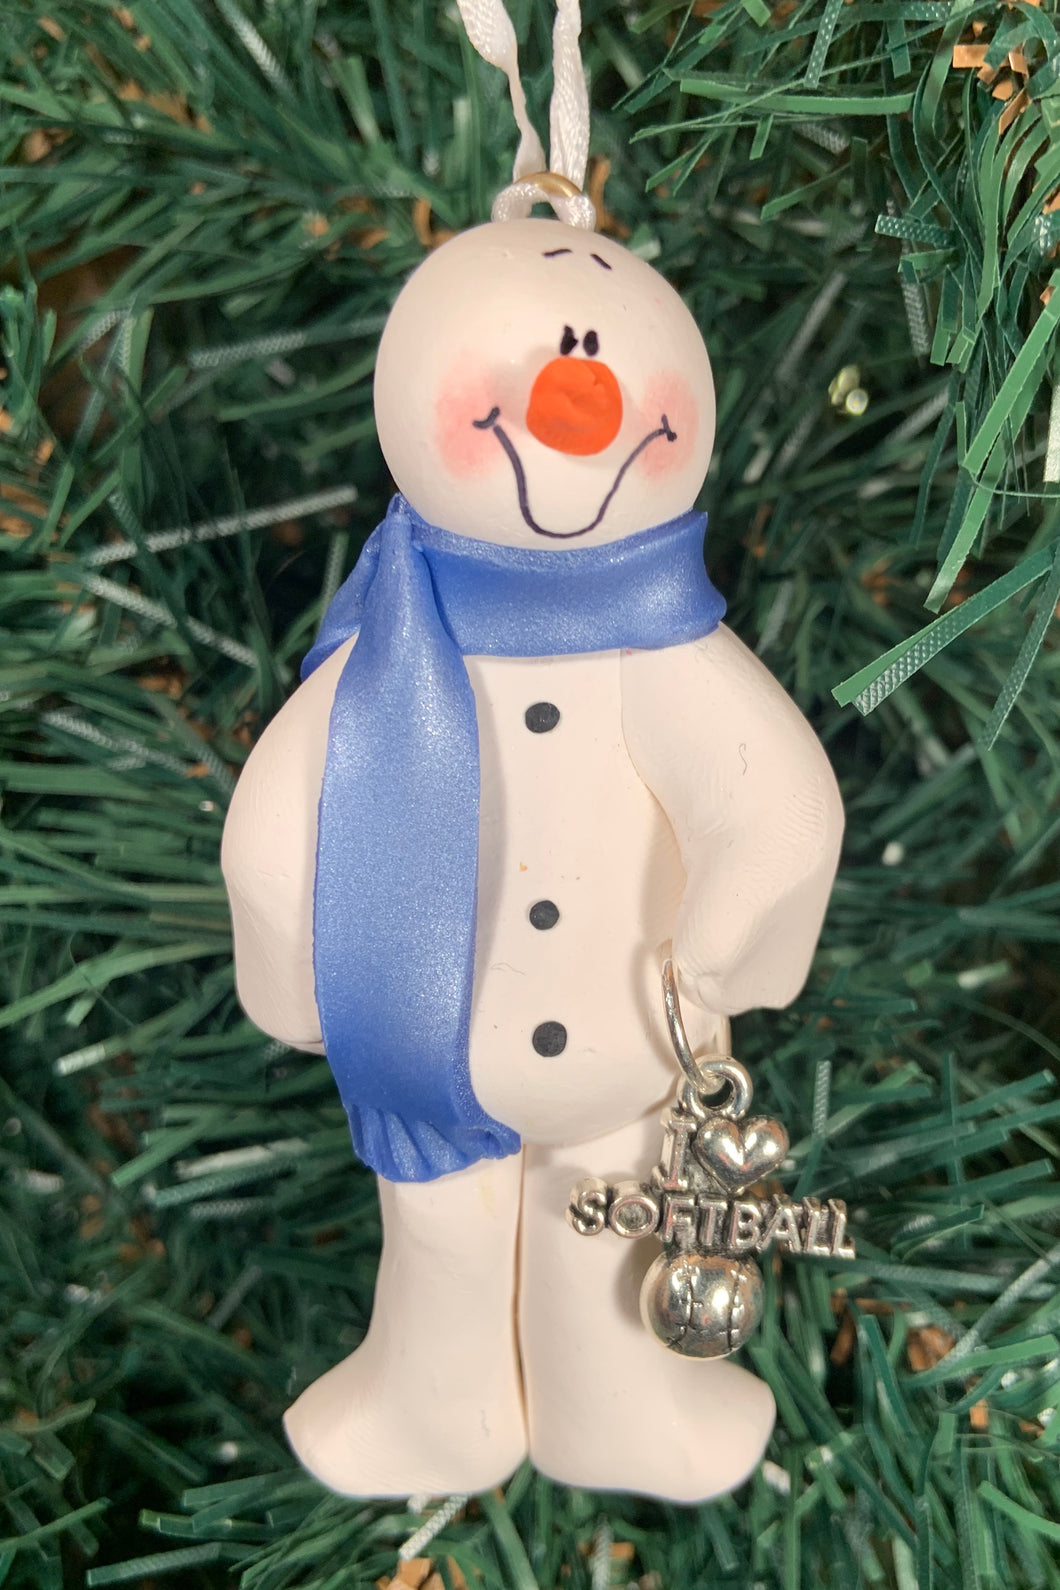 Softball Snowman Tree Ornament